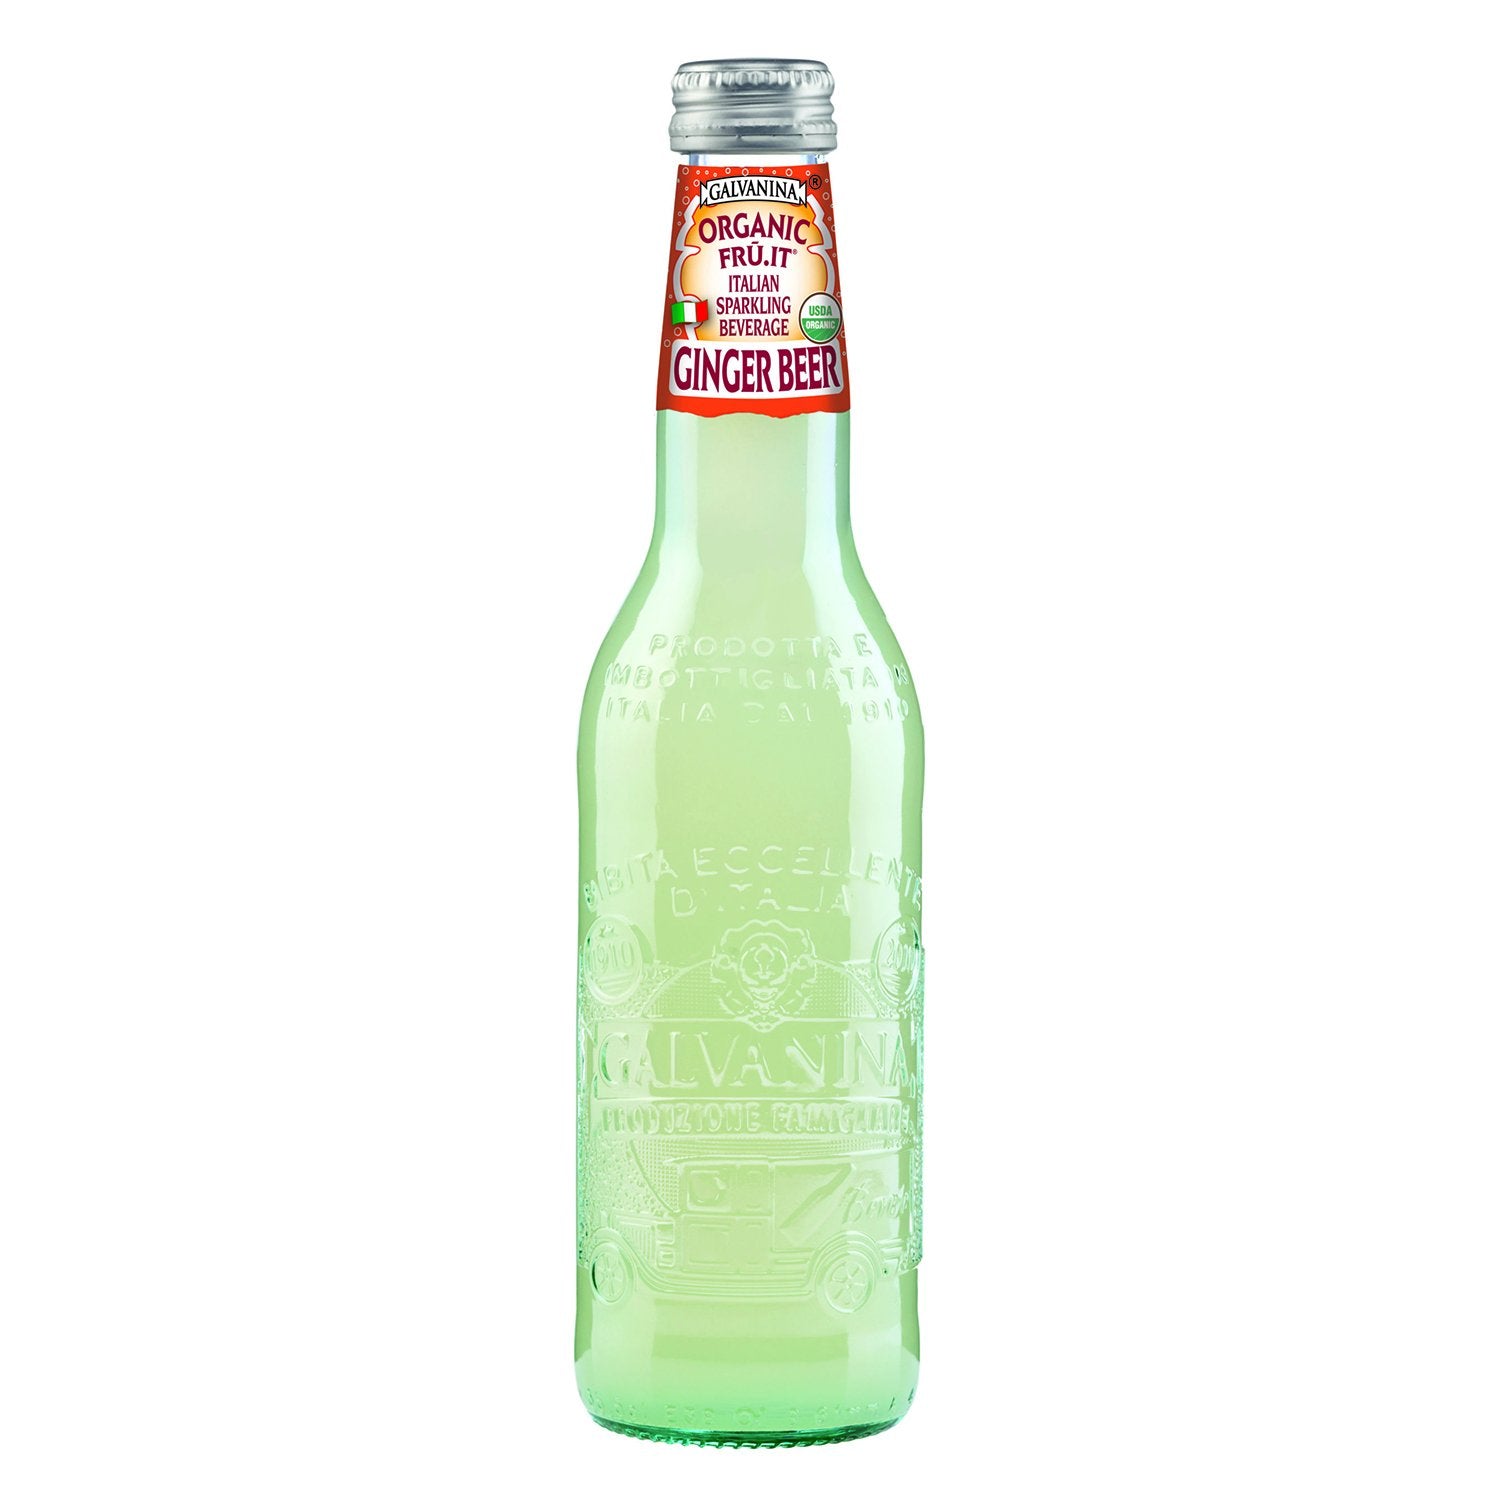 Galvanina Organic Ginger Beer, 12 fl oz | 355 mL